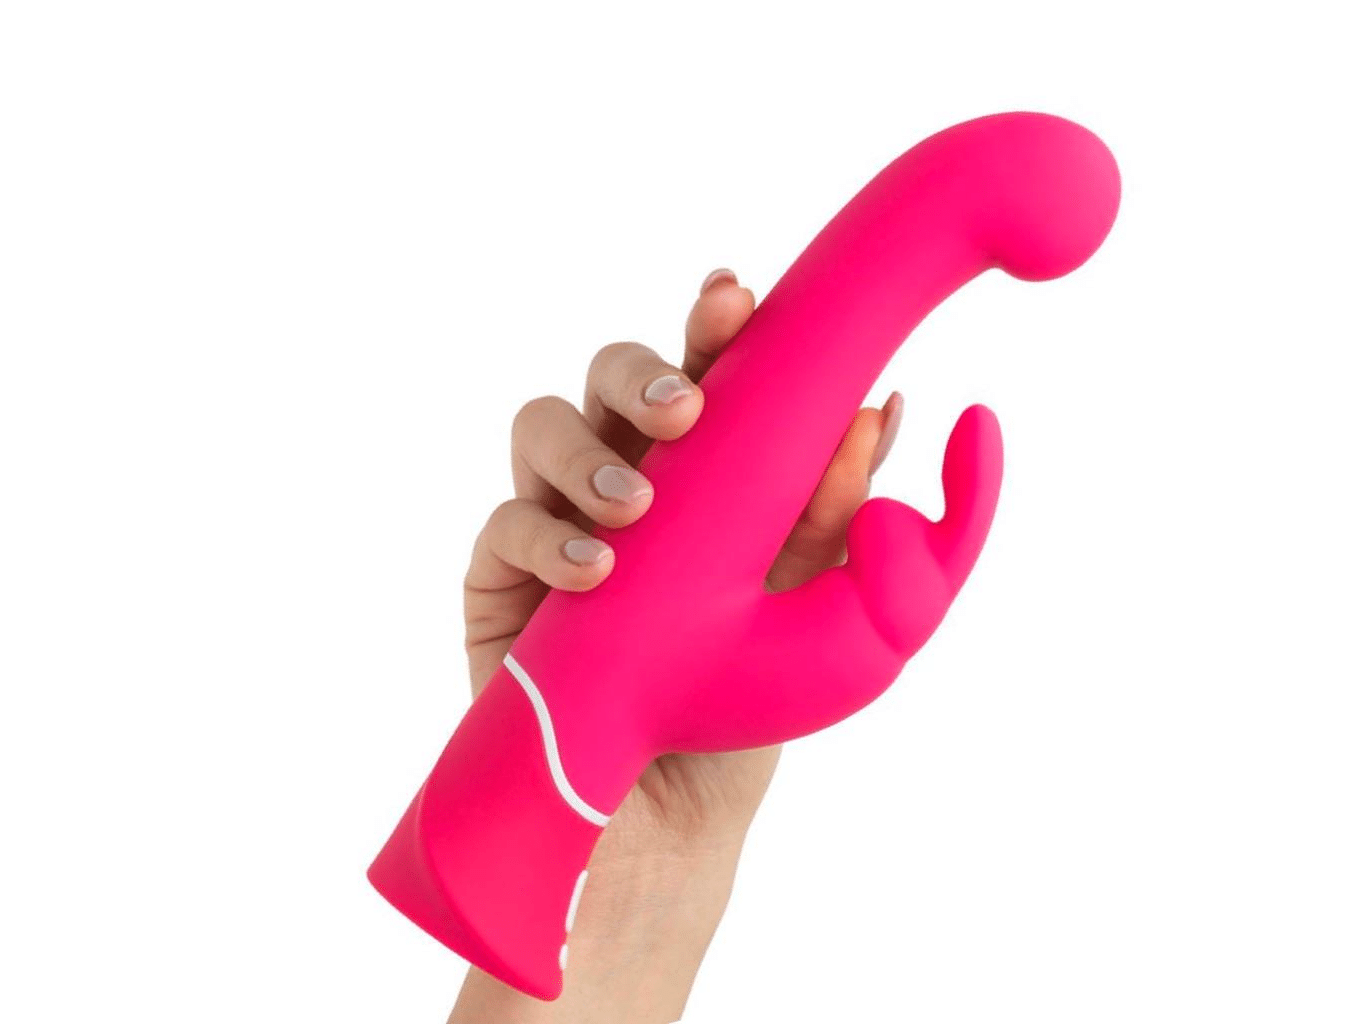 Holding a pink rabbit vibrator